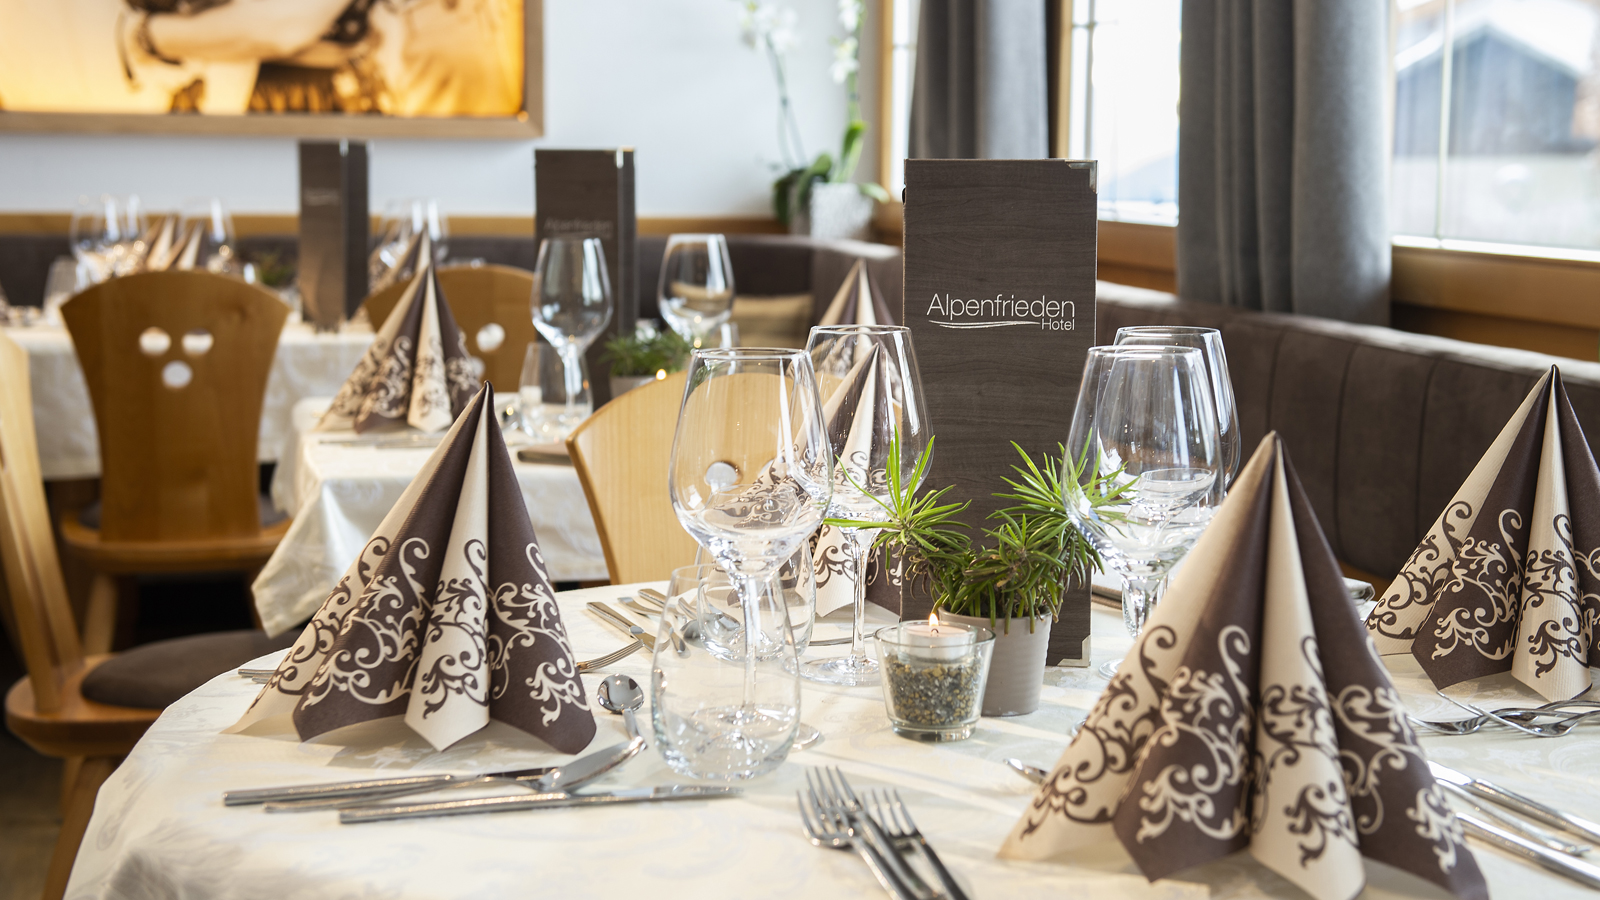 an elegant table prepared for lunch at Hotel Alpenfrieden in summer